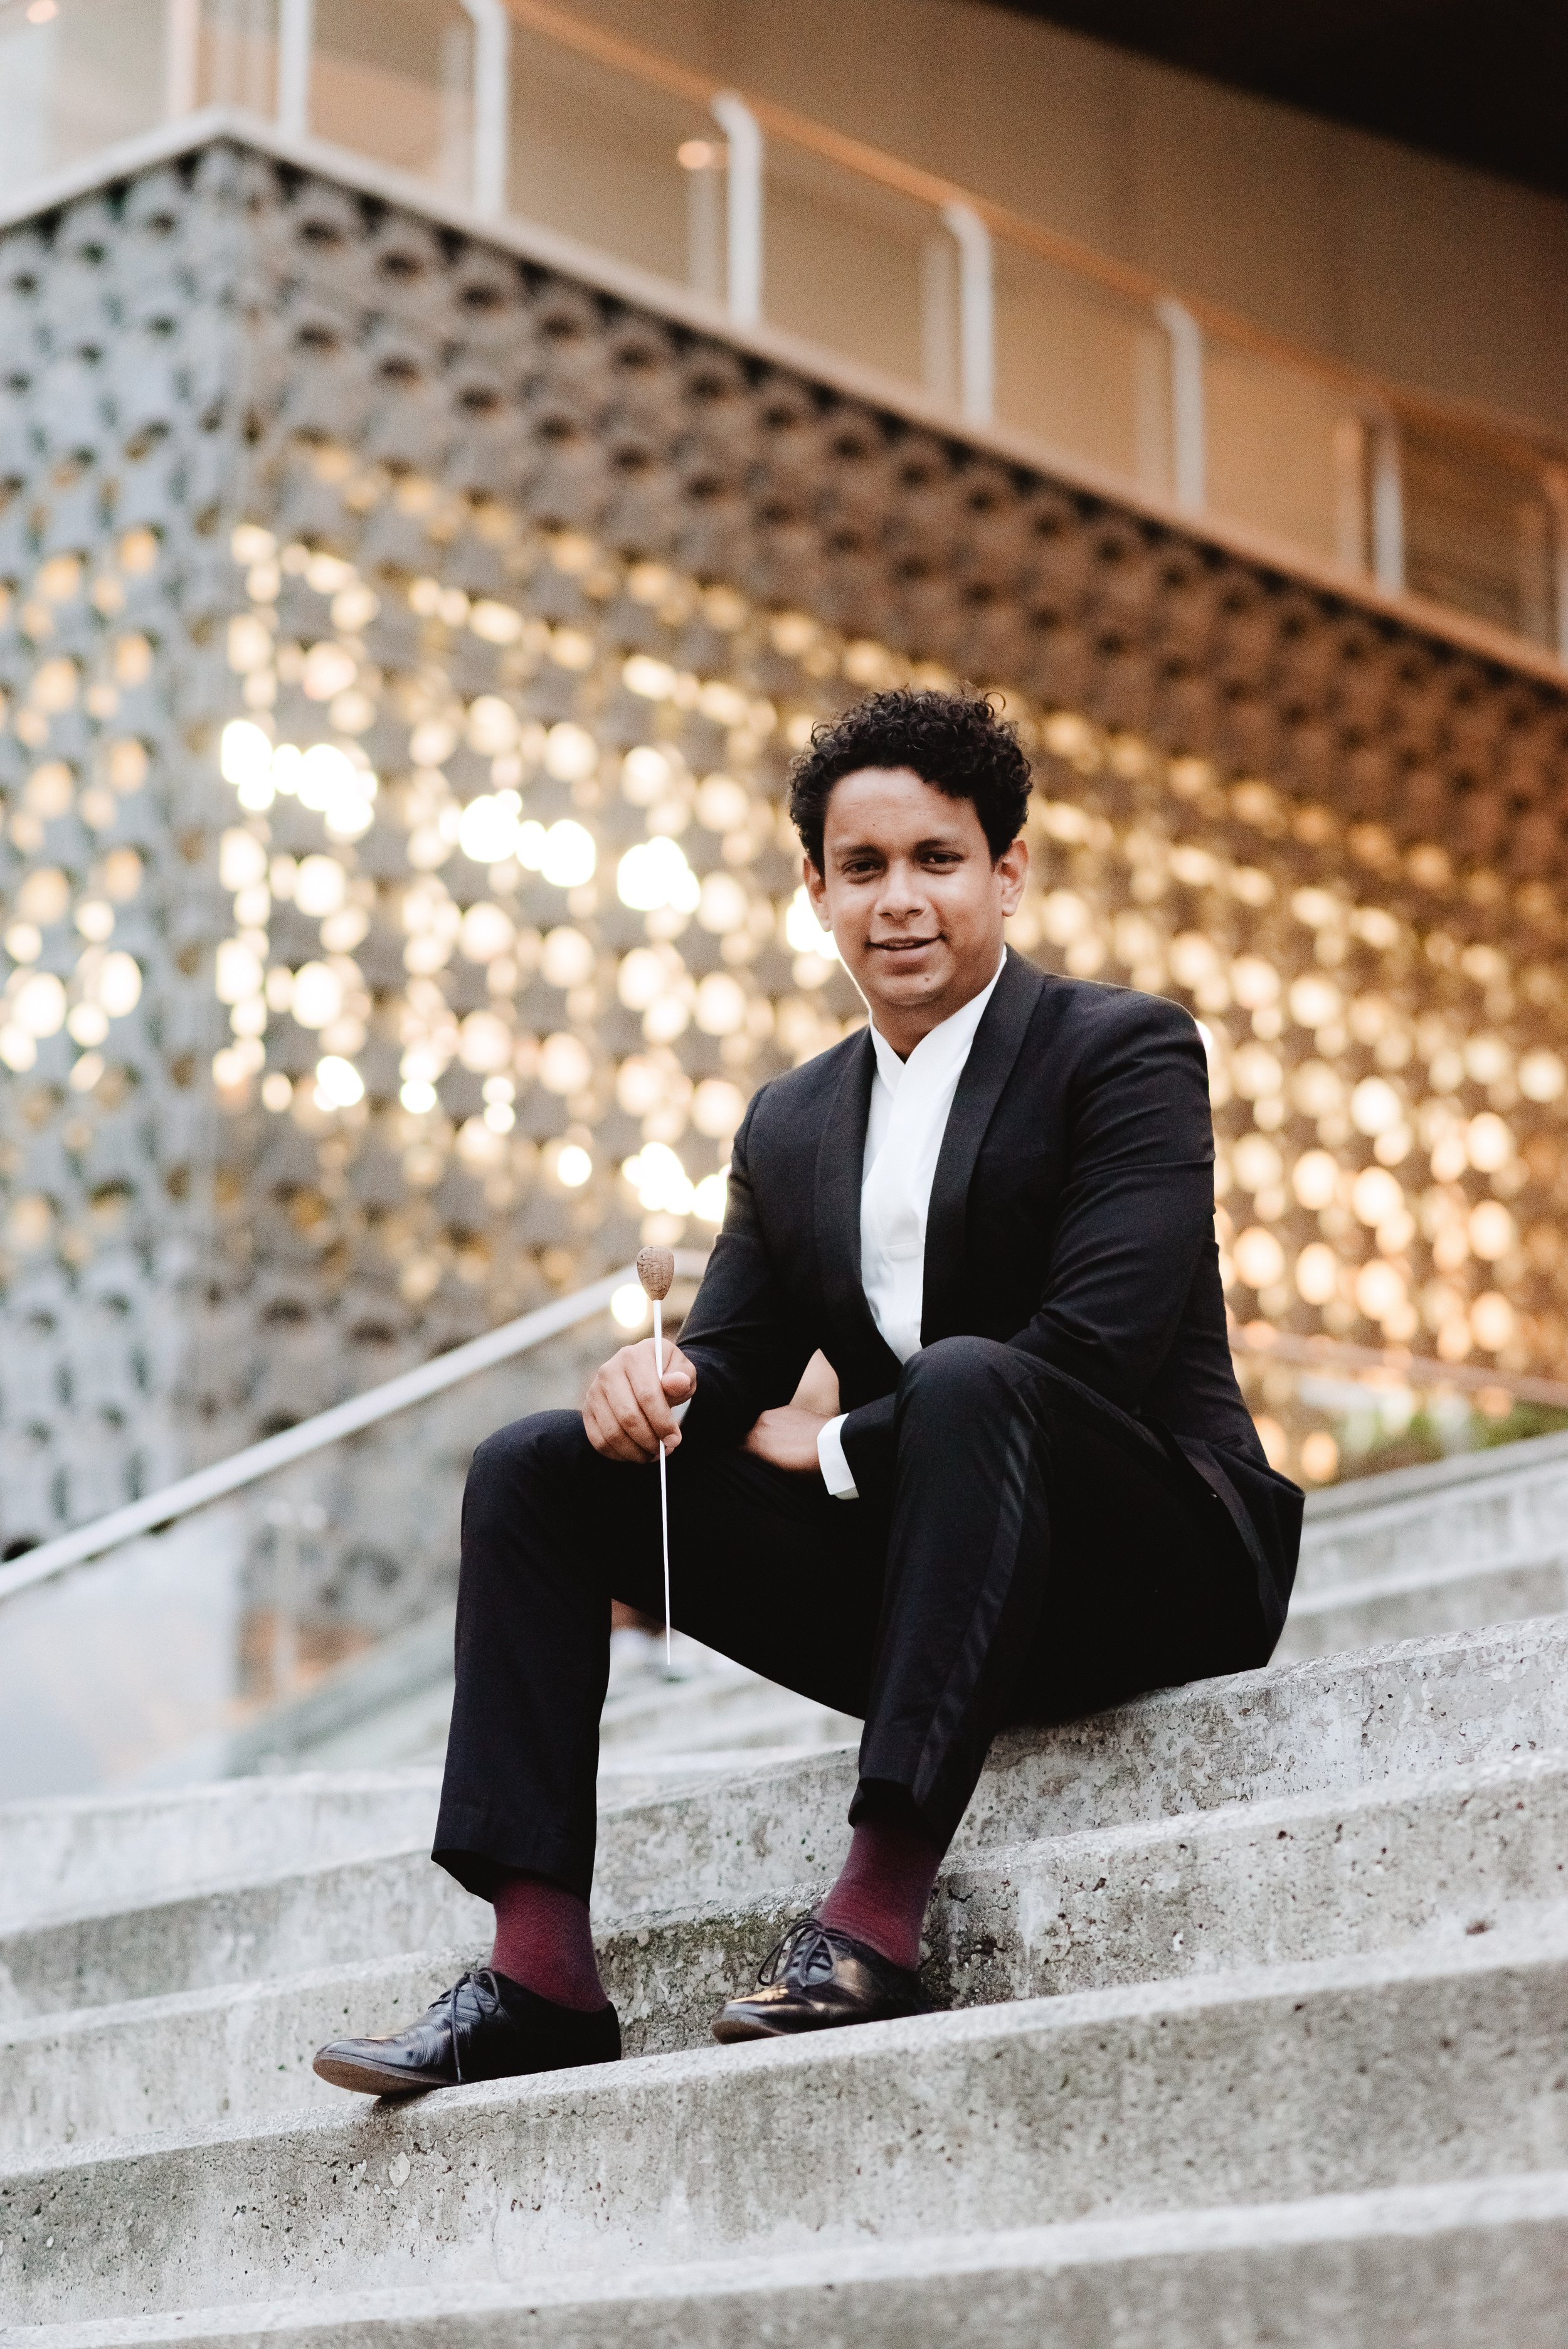 Sebastian Serrano Ayala - Colombian Conductor Seattle Music Educator - Medellin Personal Shooting  - Jota Pardo Wedding Photographer-194.jpg